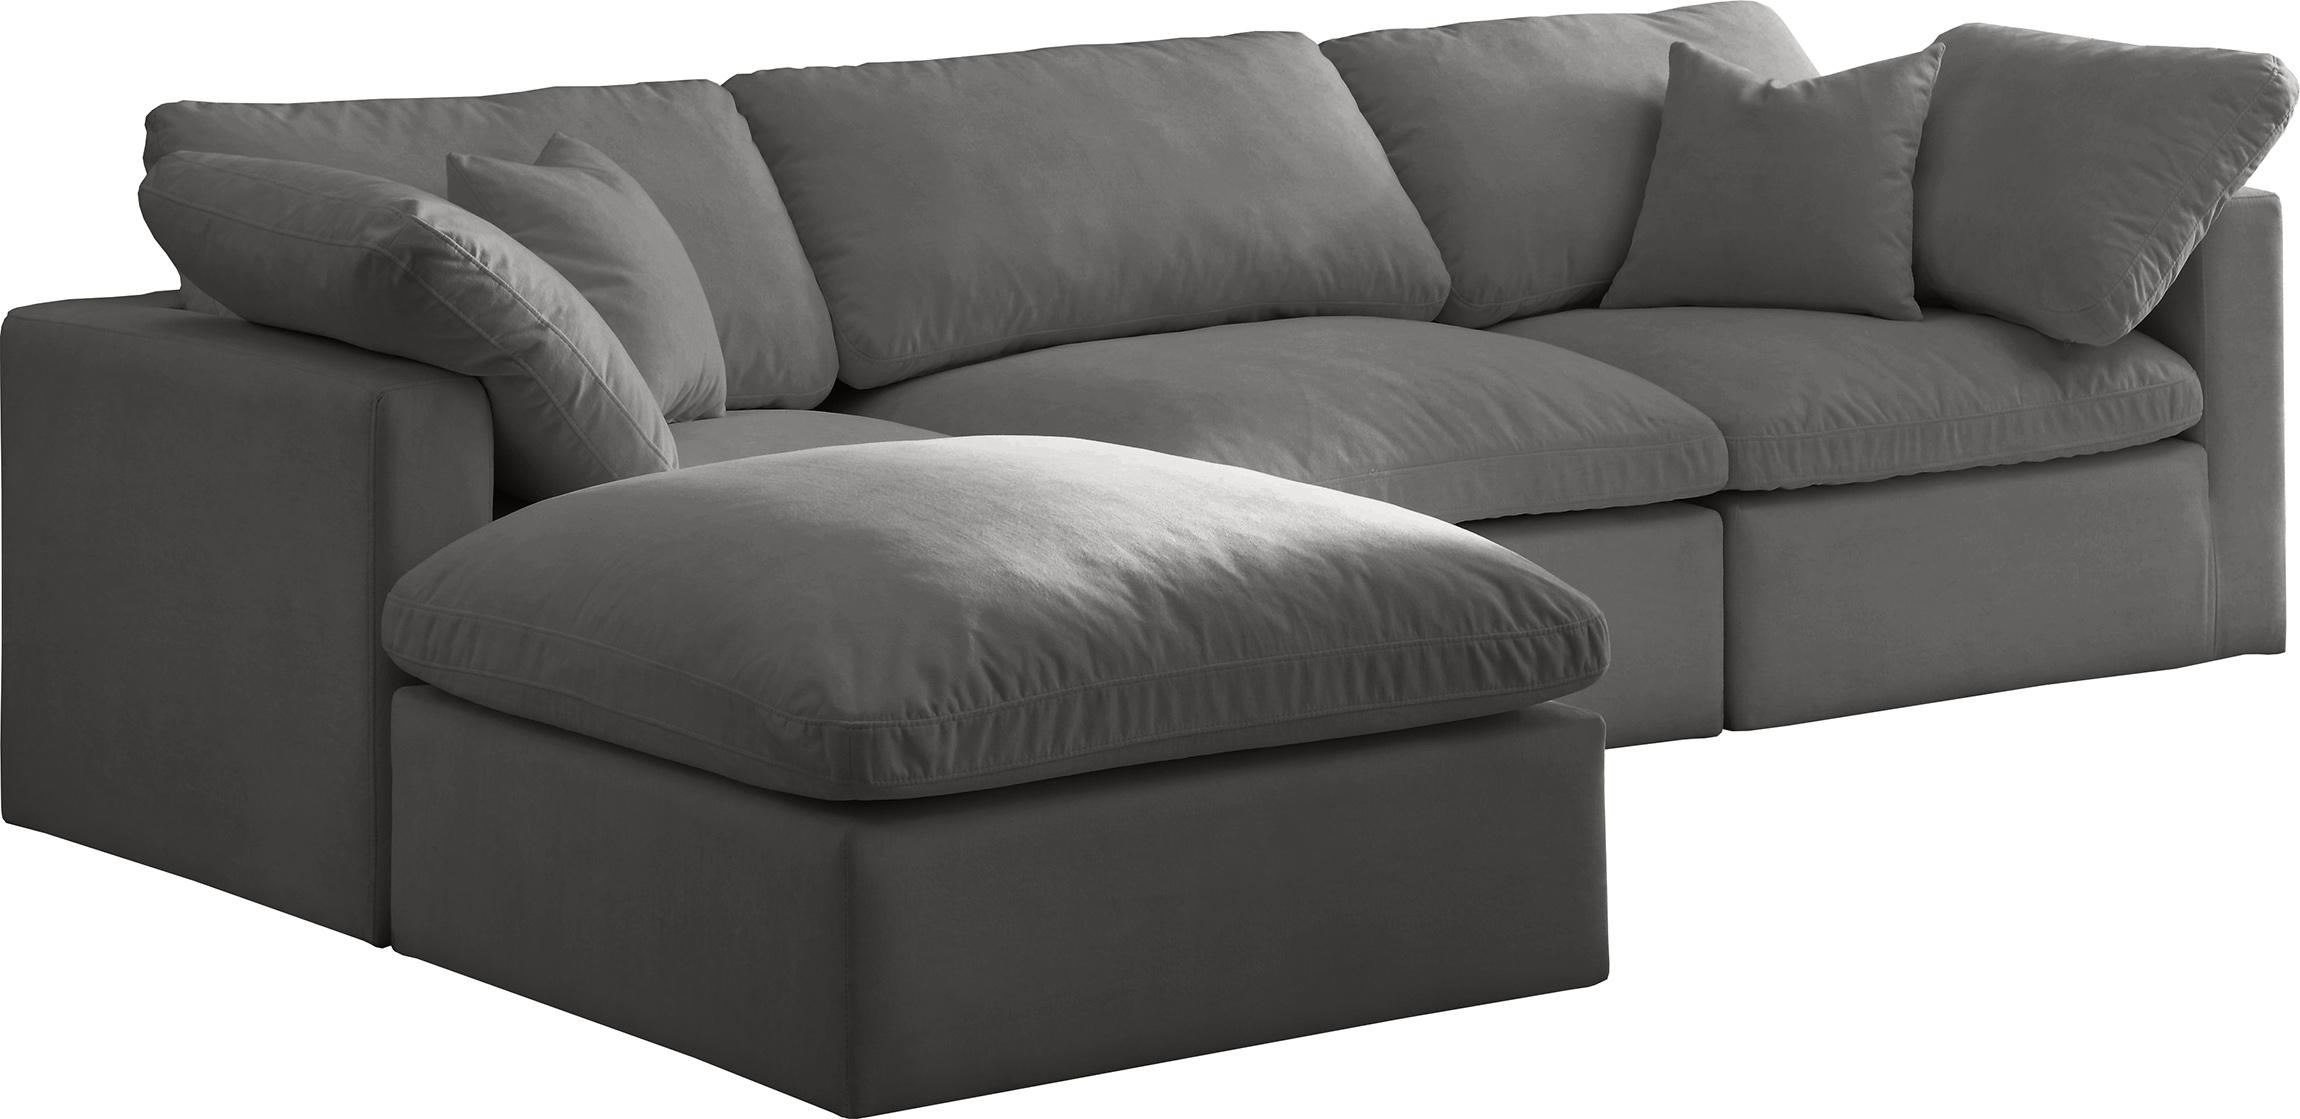 Contemporary, Modern Sectional Sofa 602Grey-Sec4A 602Grey-Sec4A in Gray Fabric